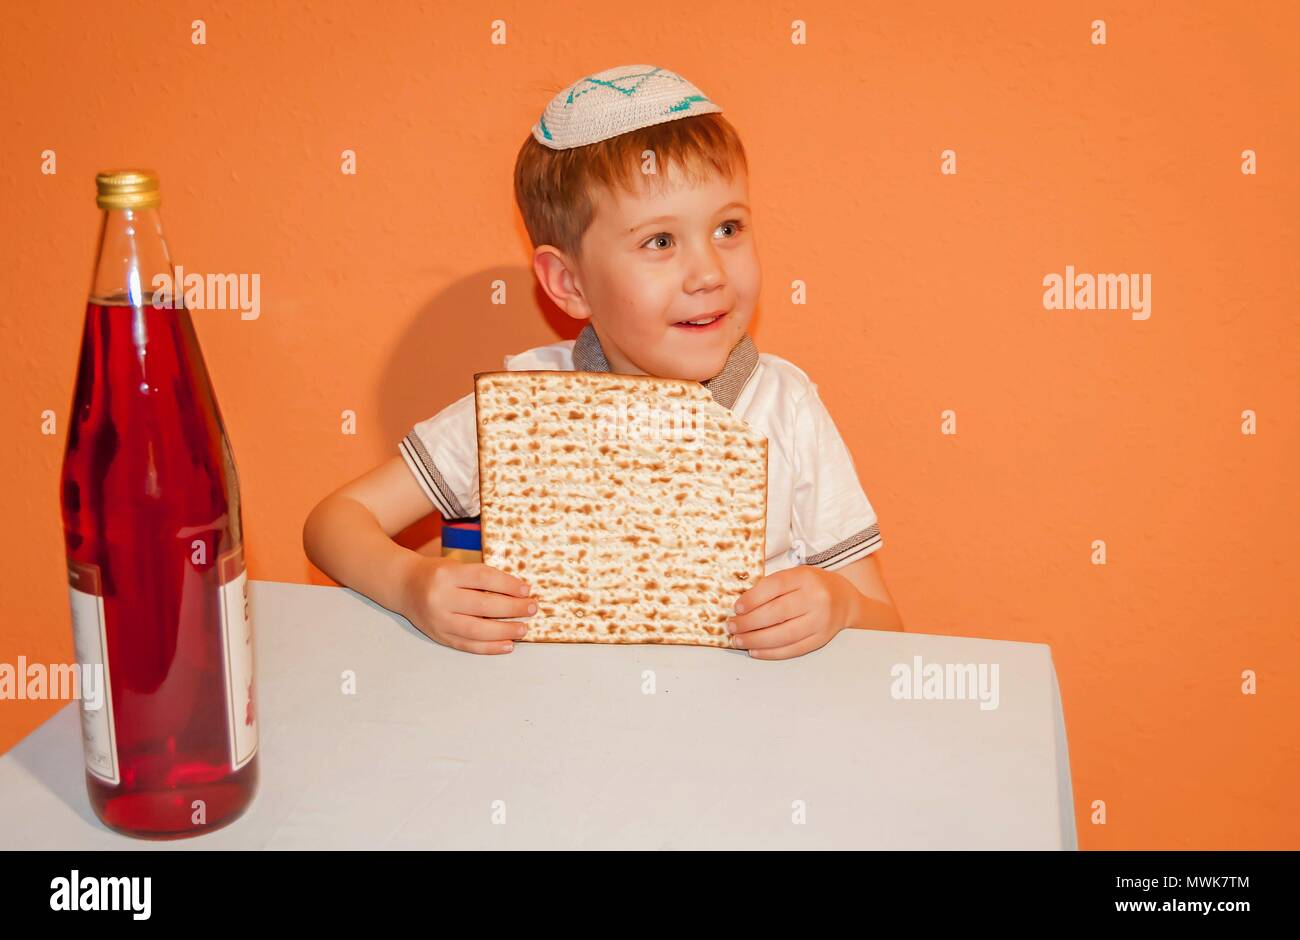 Little Caucasian child with a kippah on his head eating matzah. Jewish Passover illustration. Stock Photo